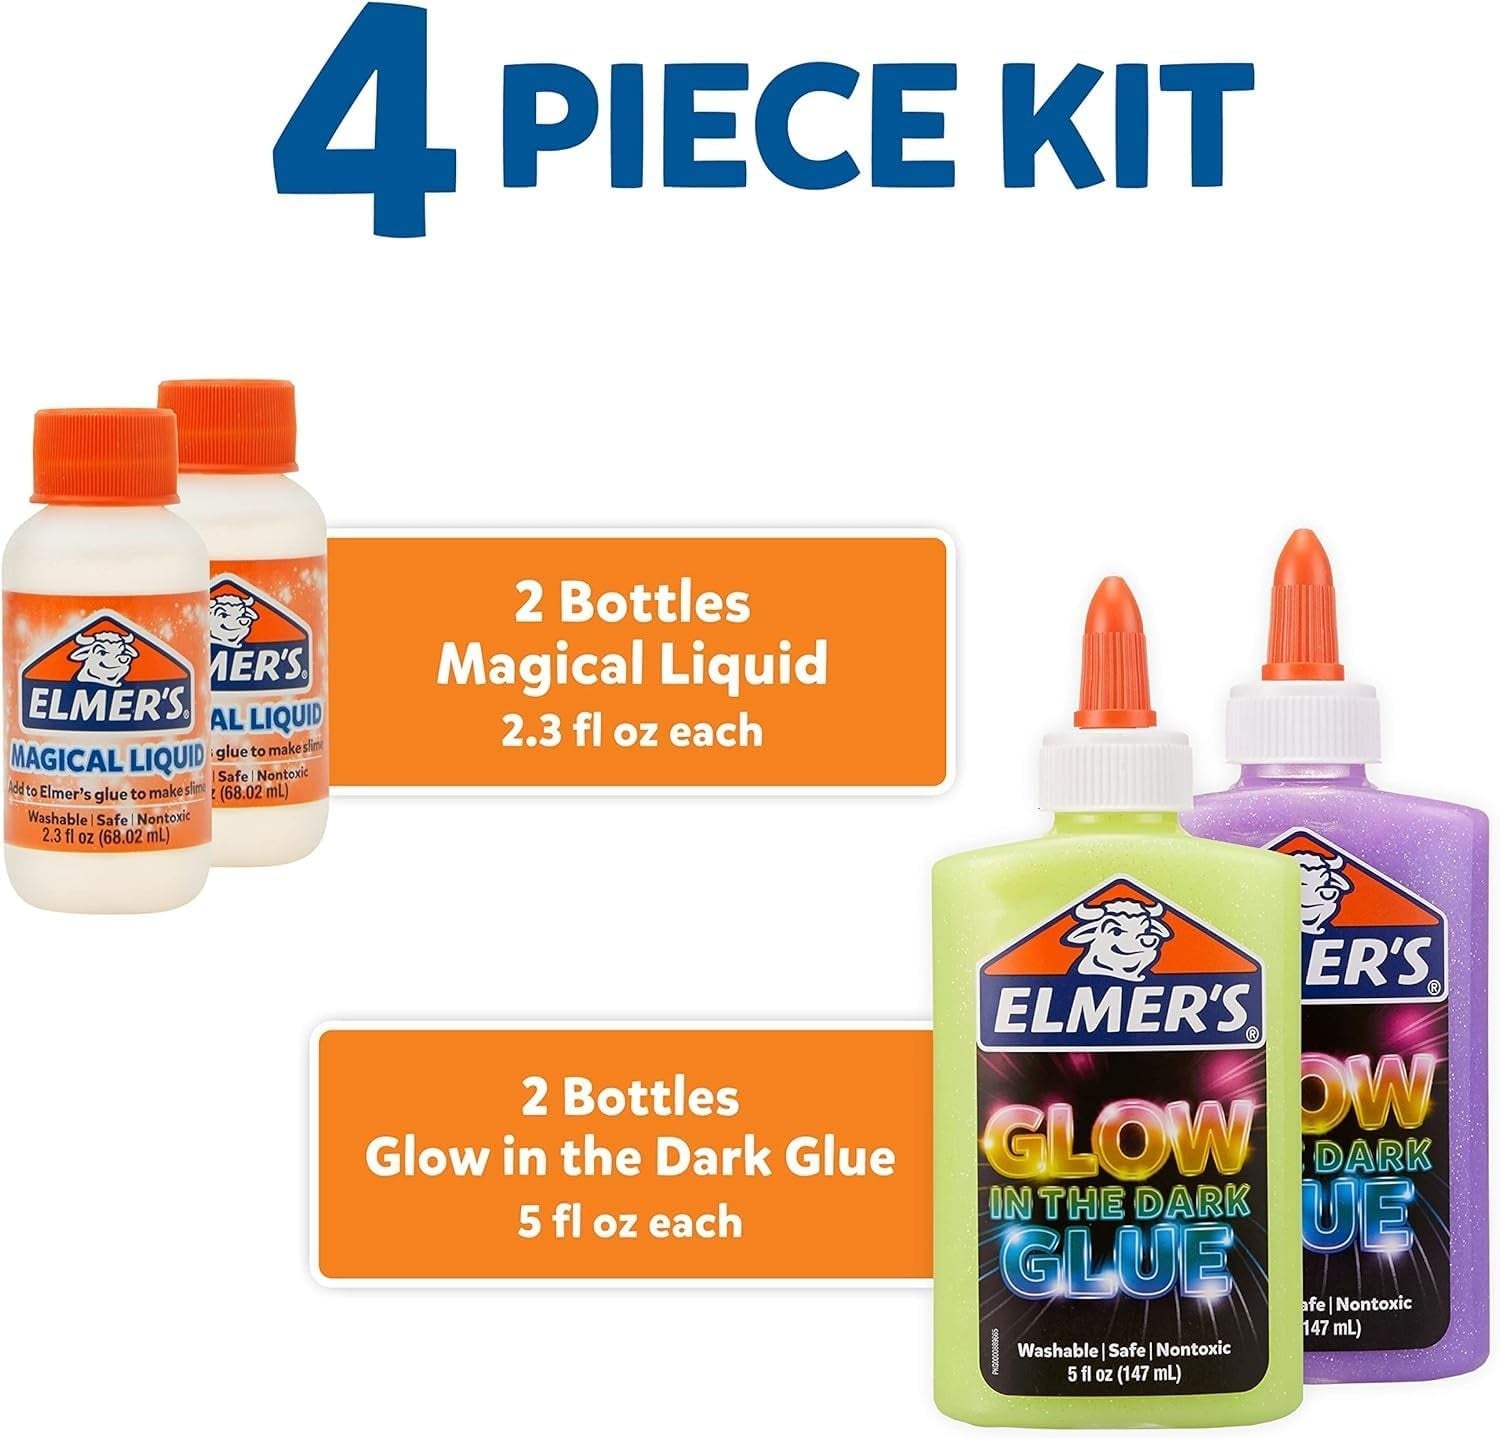 Glow-In-The-Dark Slime Kit (2062242), Yellow + Purple Glow, 4 Piece Kit